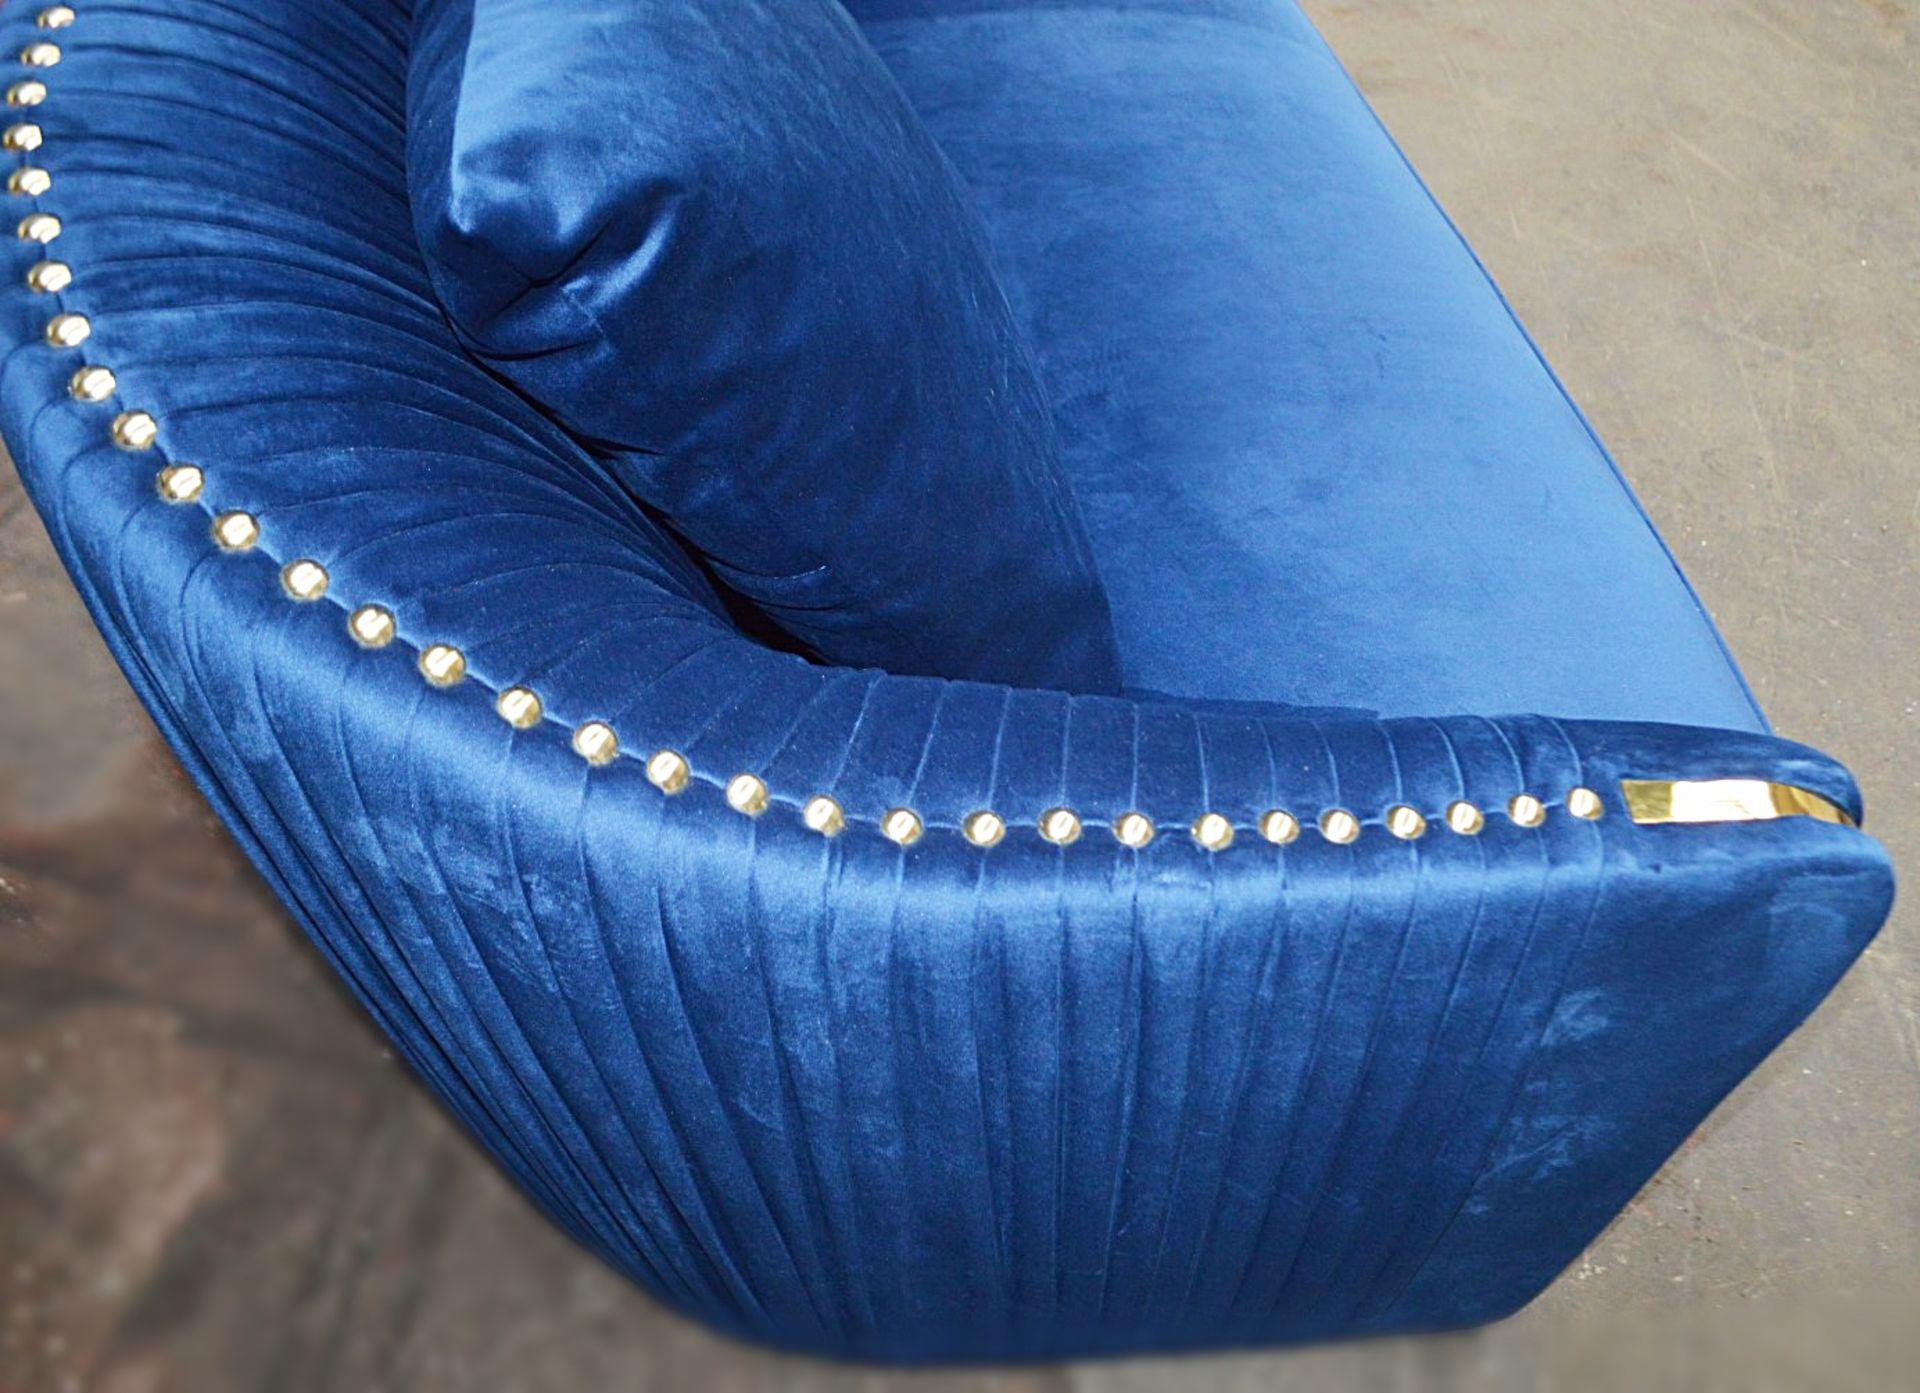 1 x Bespoke Blue Velvet Button-Back Sofa In A Rich Royal Blue Velvet With Detailing In Gold - Image 8 of 8